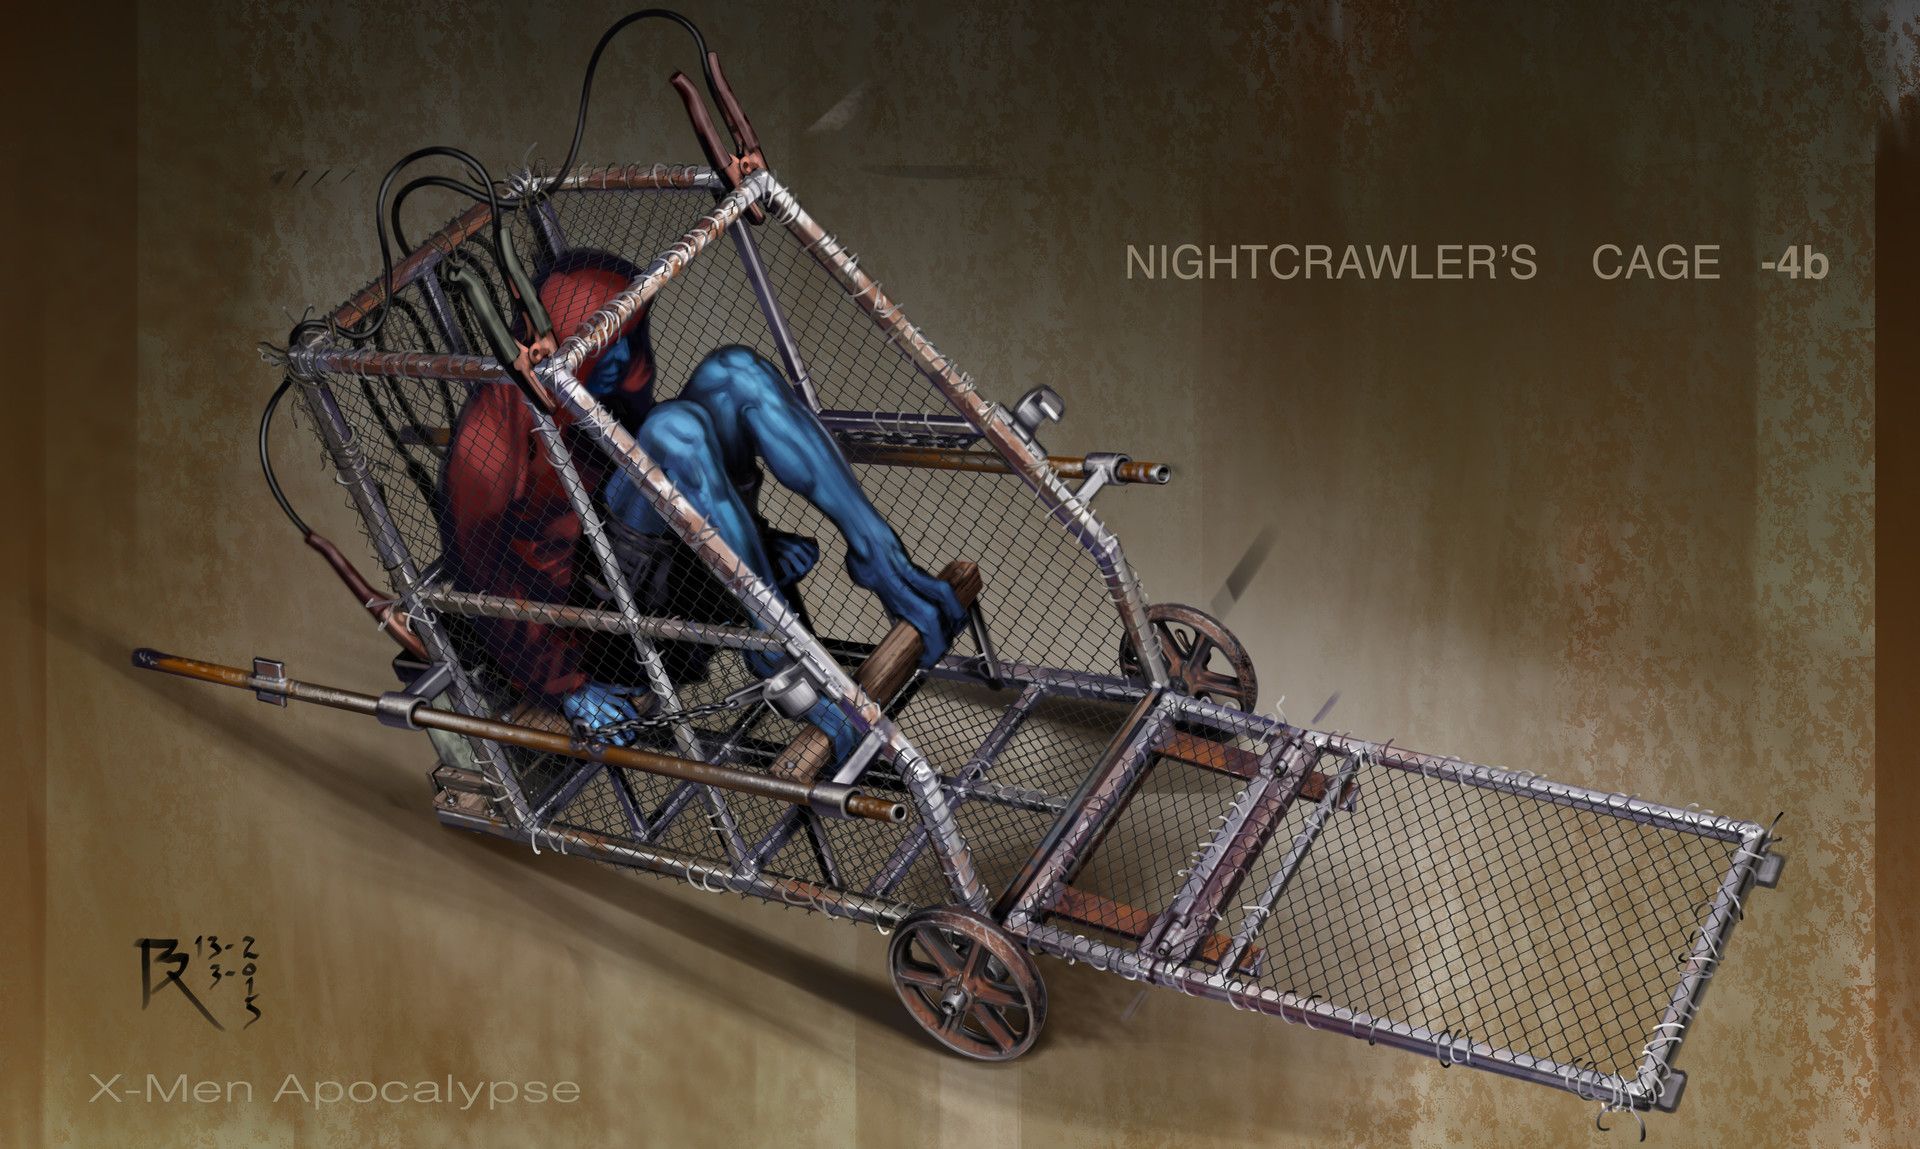 Nightcrawler Cage by Bartol Rendulic